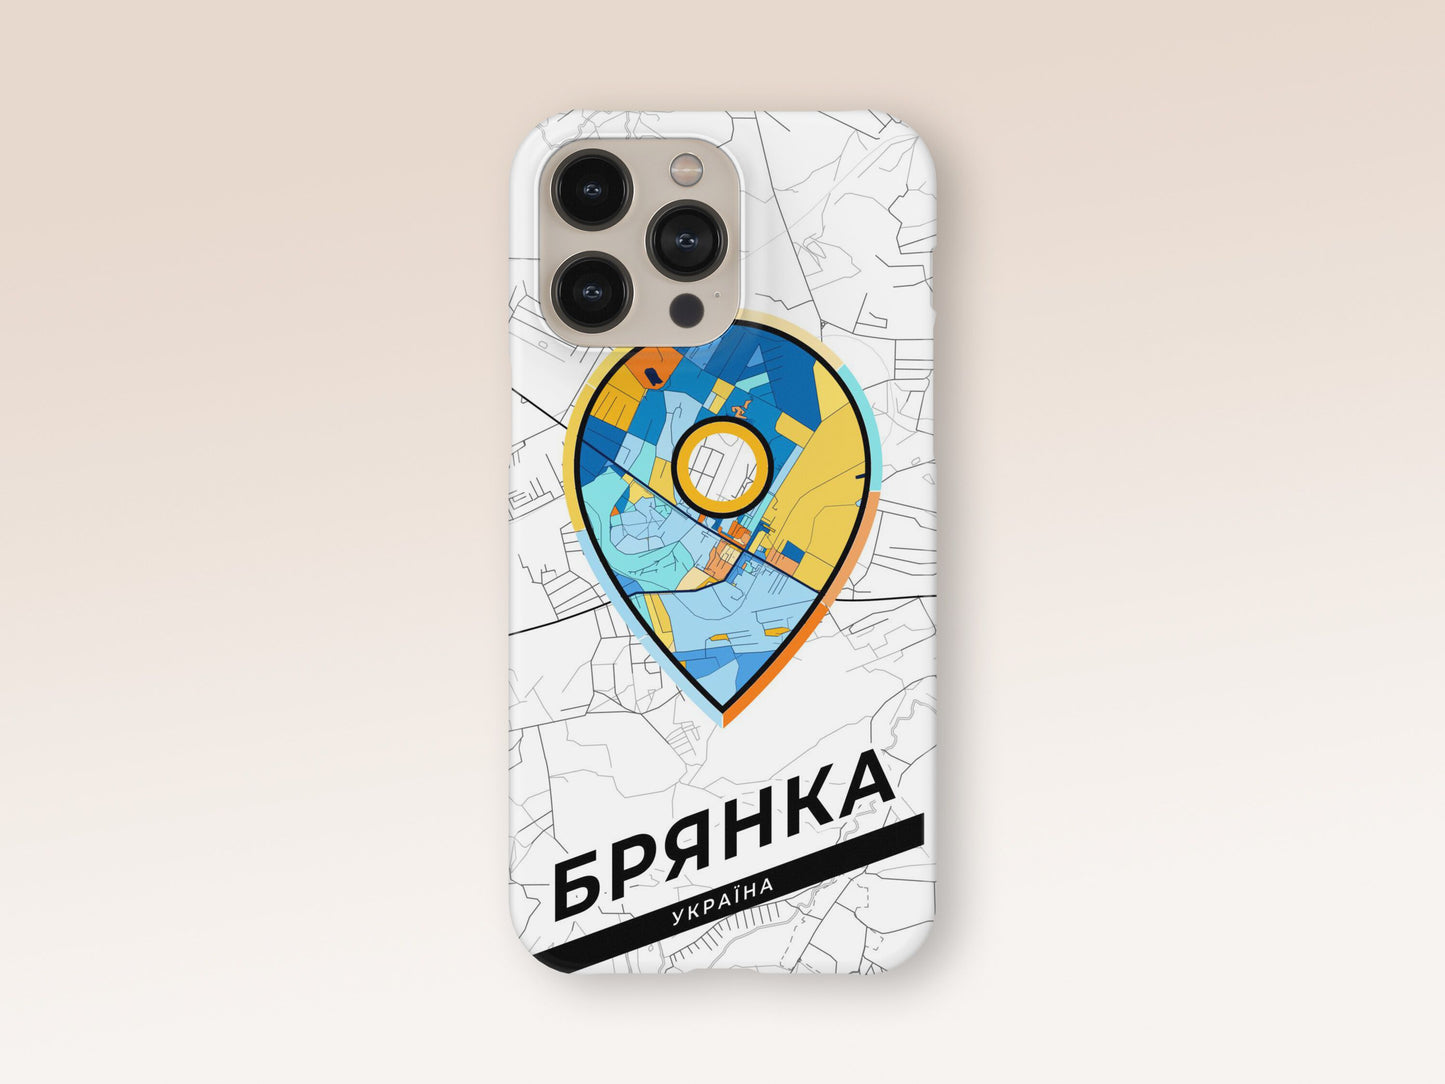 Brianka Ukraine slim phone case with colorful icon. Birthday, wedding or housewarming gift. Couple match cases. 1